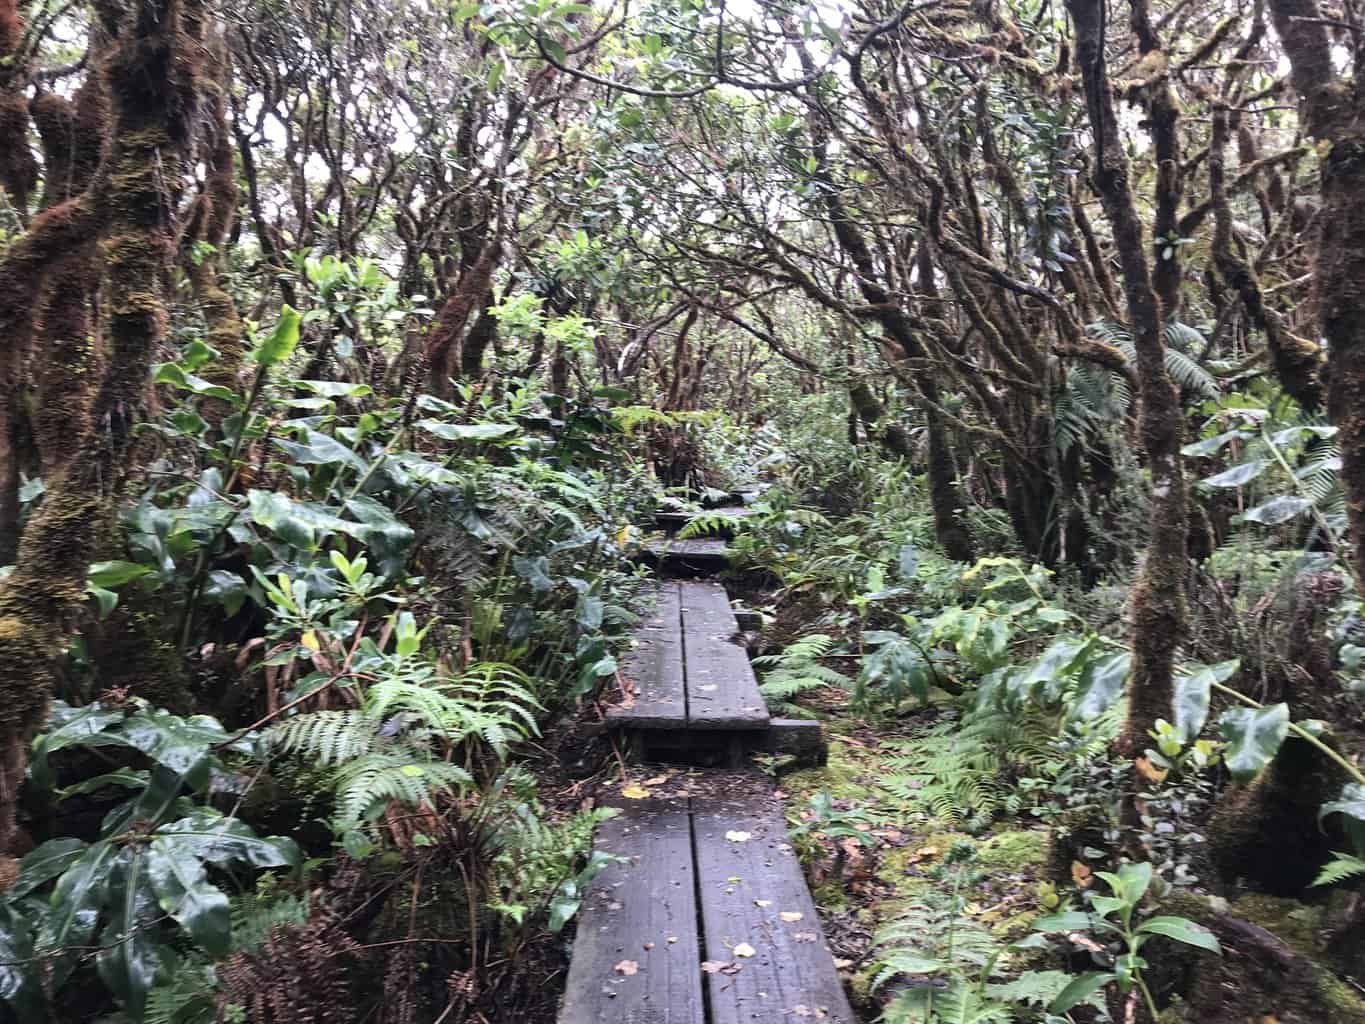 Alakai Swamp Trail